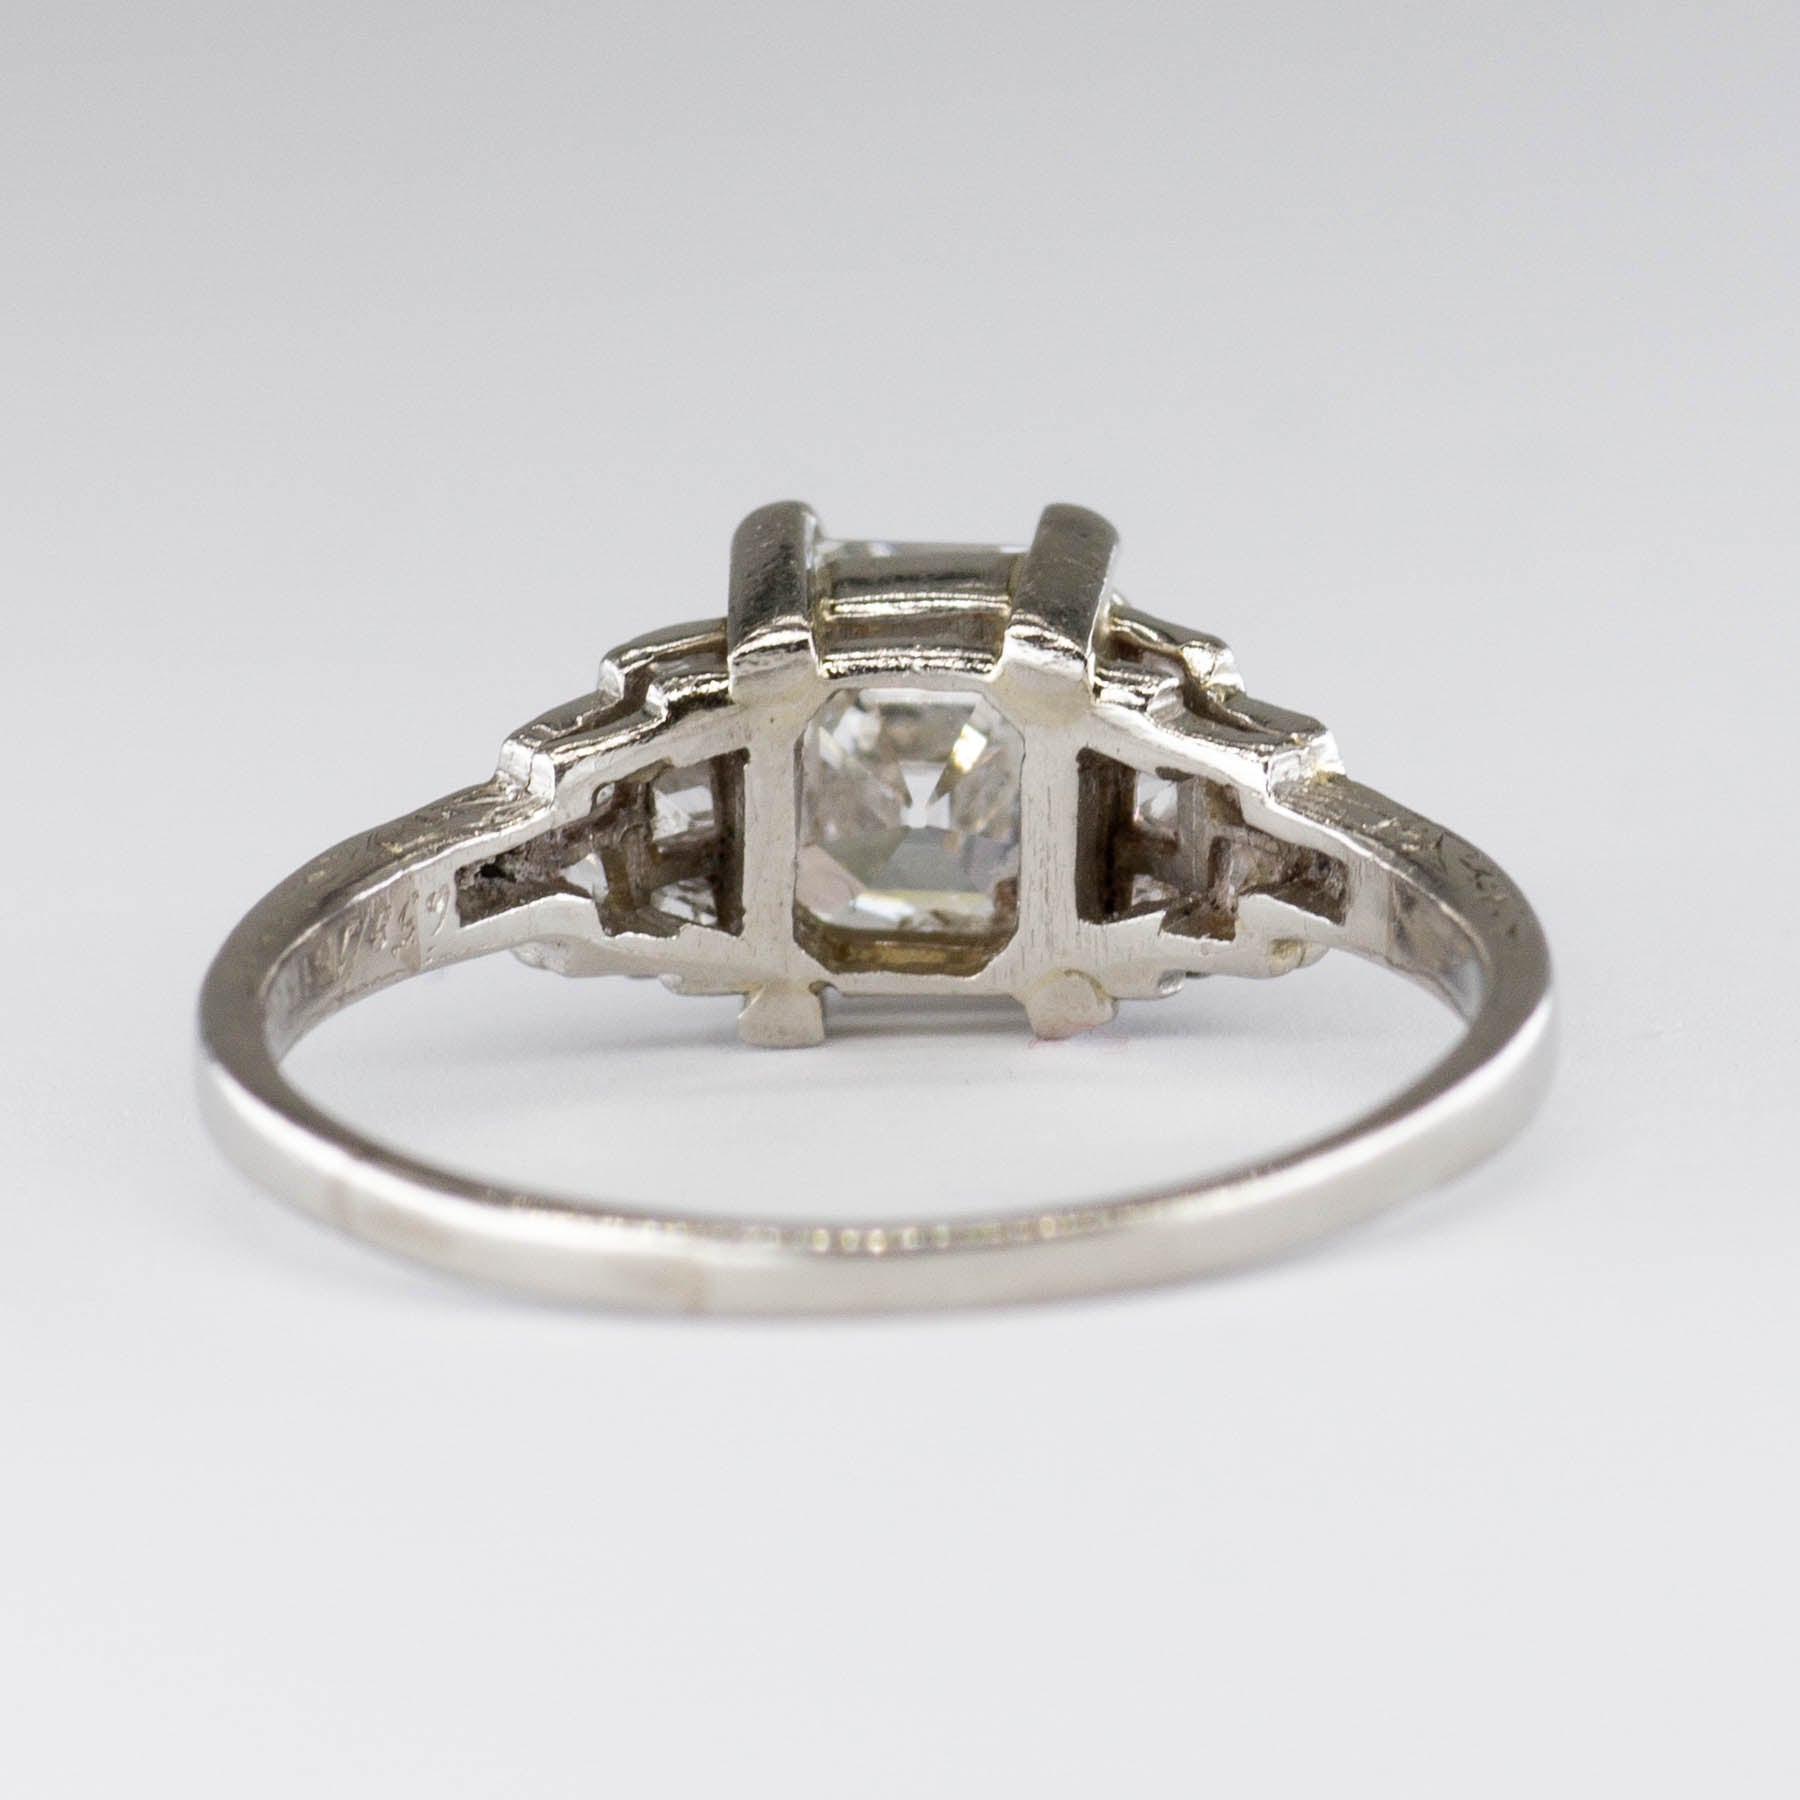 'Birks' Platinum Diamond Accented Ring | 1.45 ct | SZ 7.5 - 100 Ways